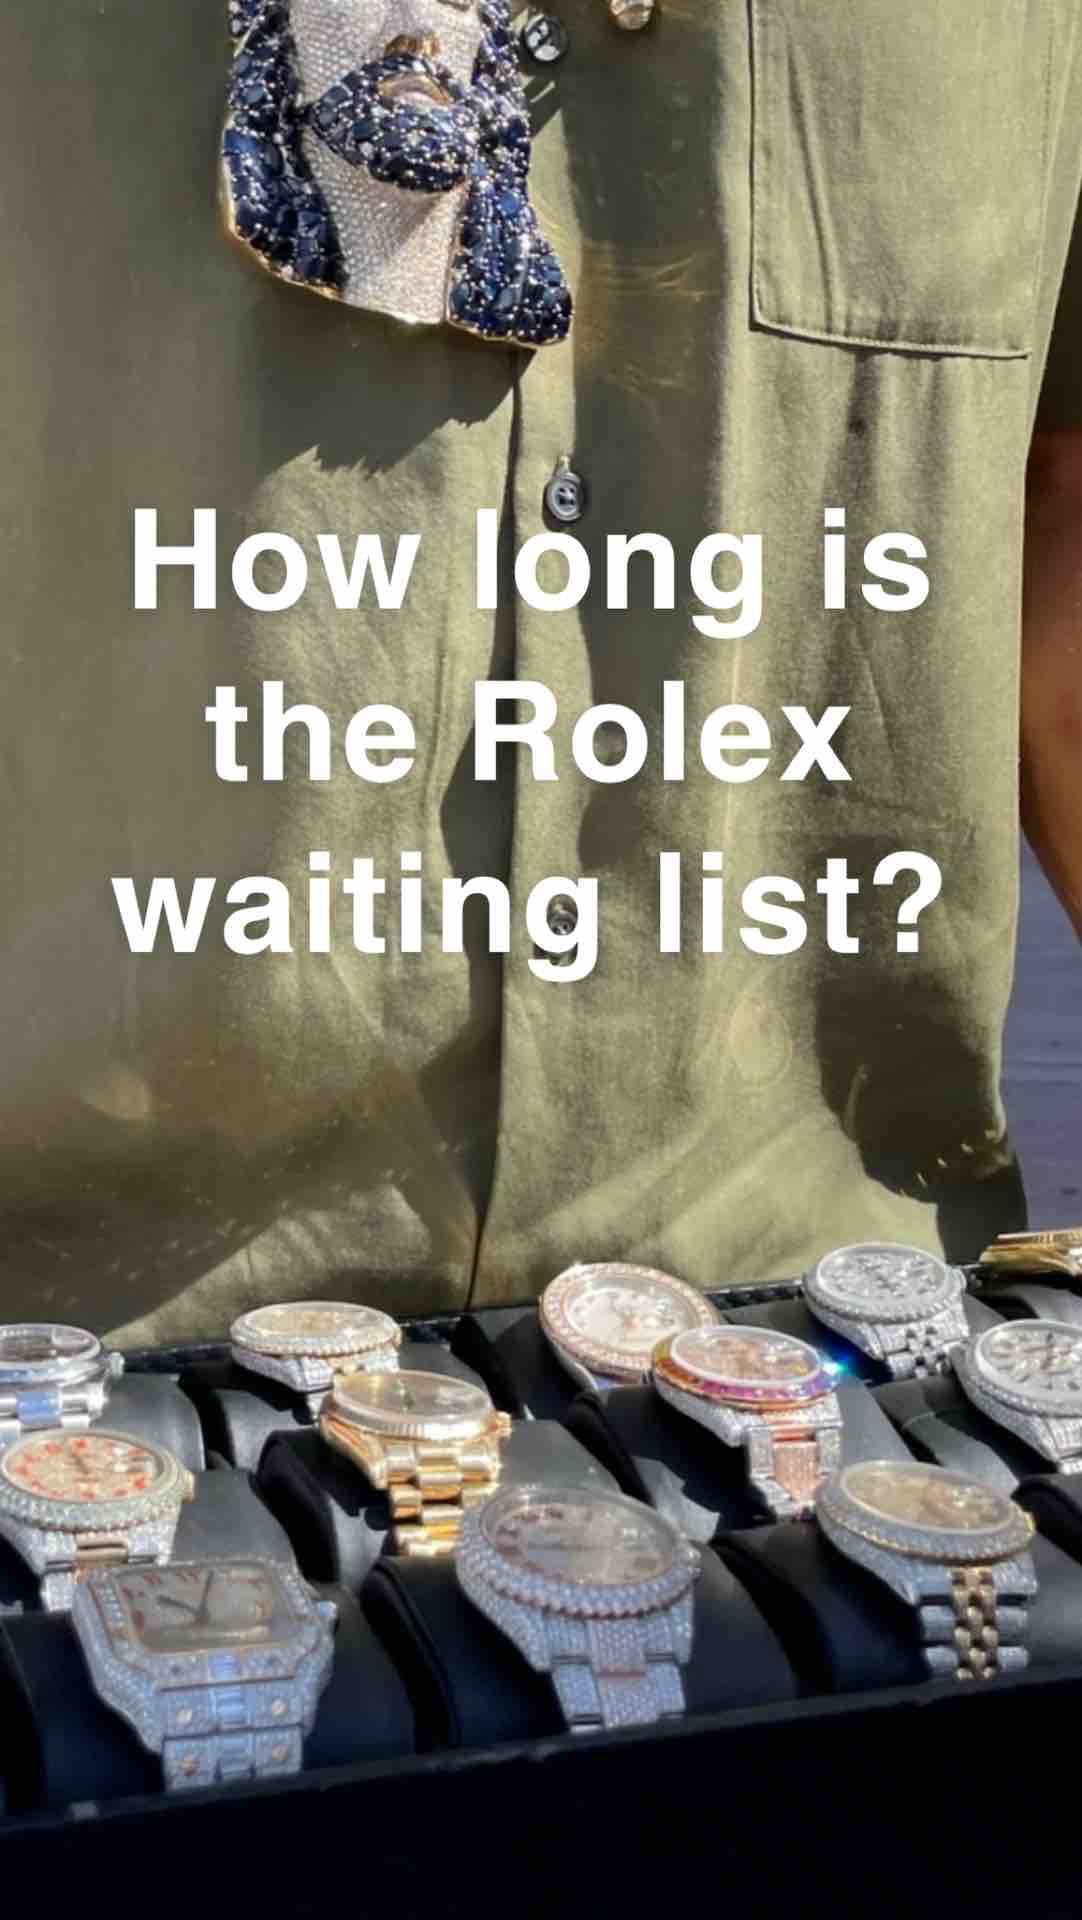 How long is Rolex waiting list?